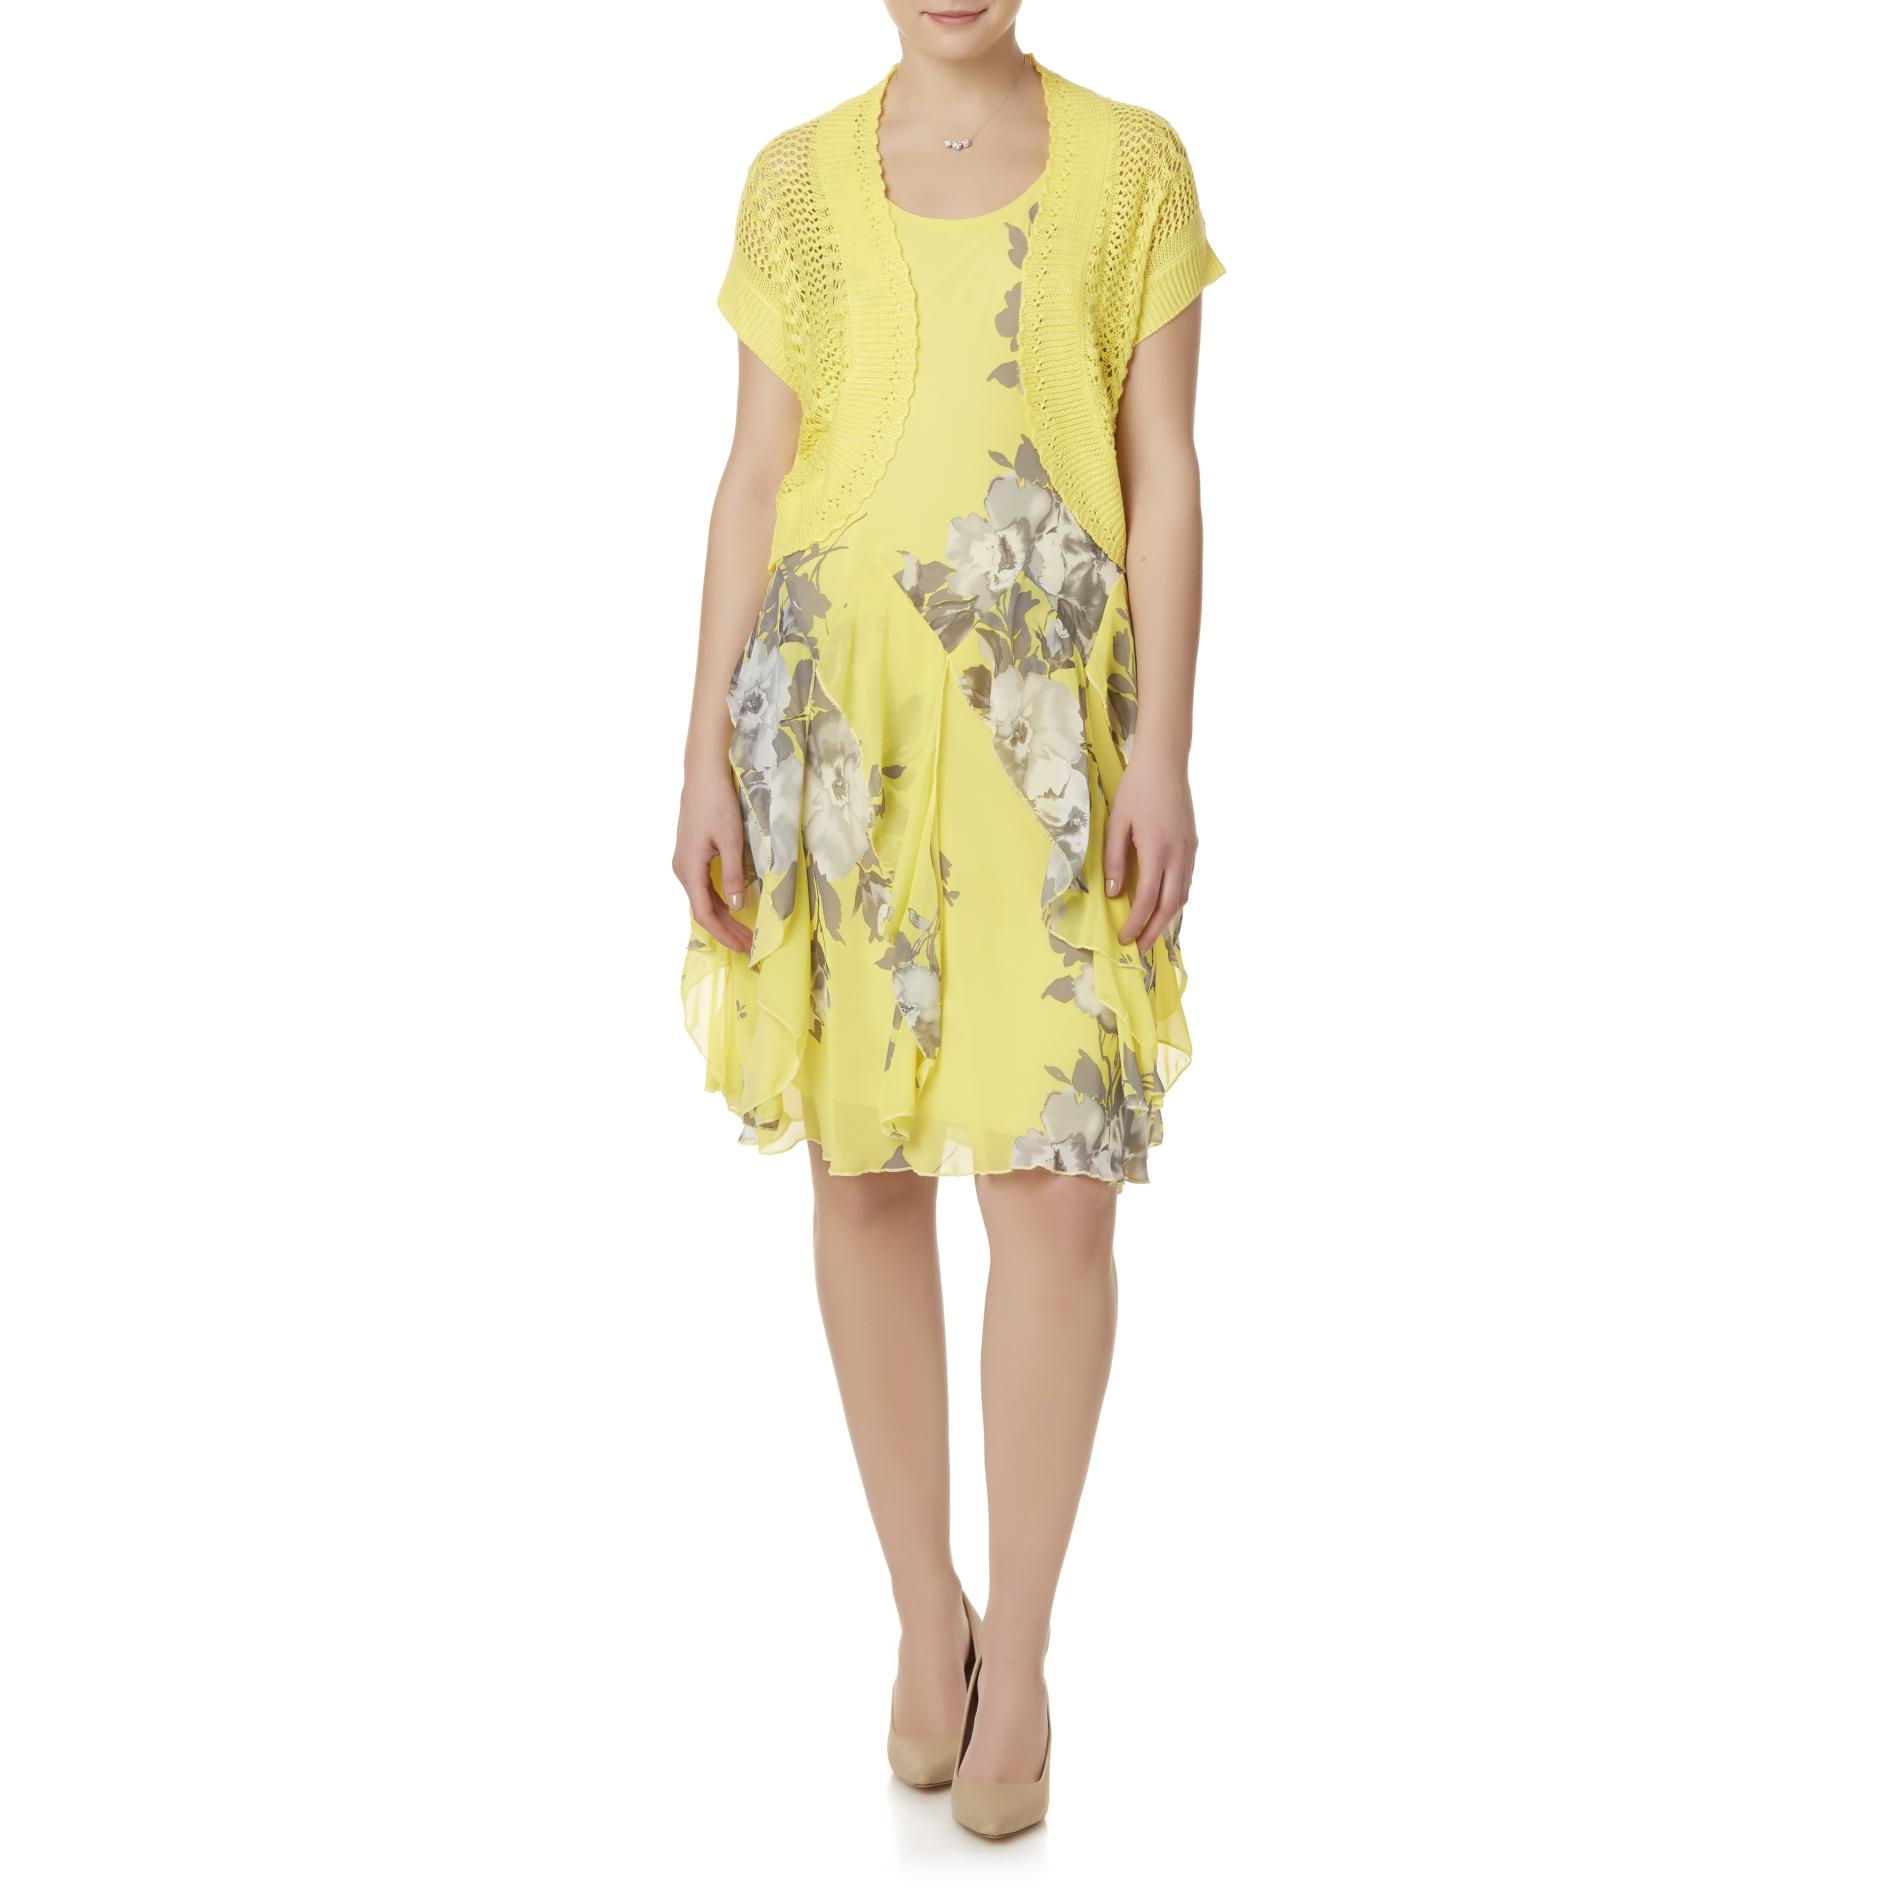 Robbie Bee Women's Sleeveless Dress & Shrug - Floral